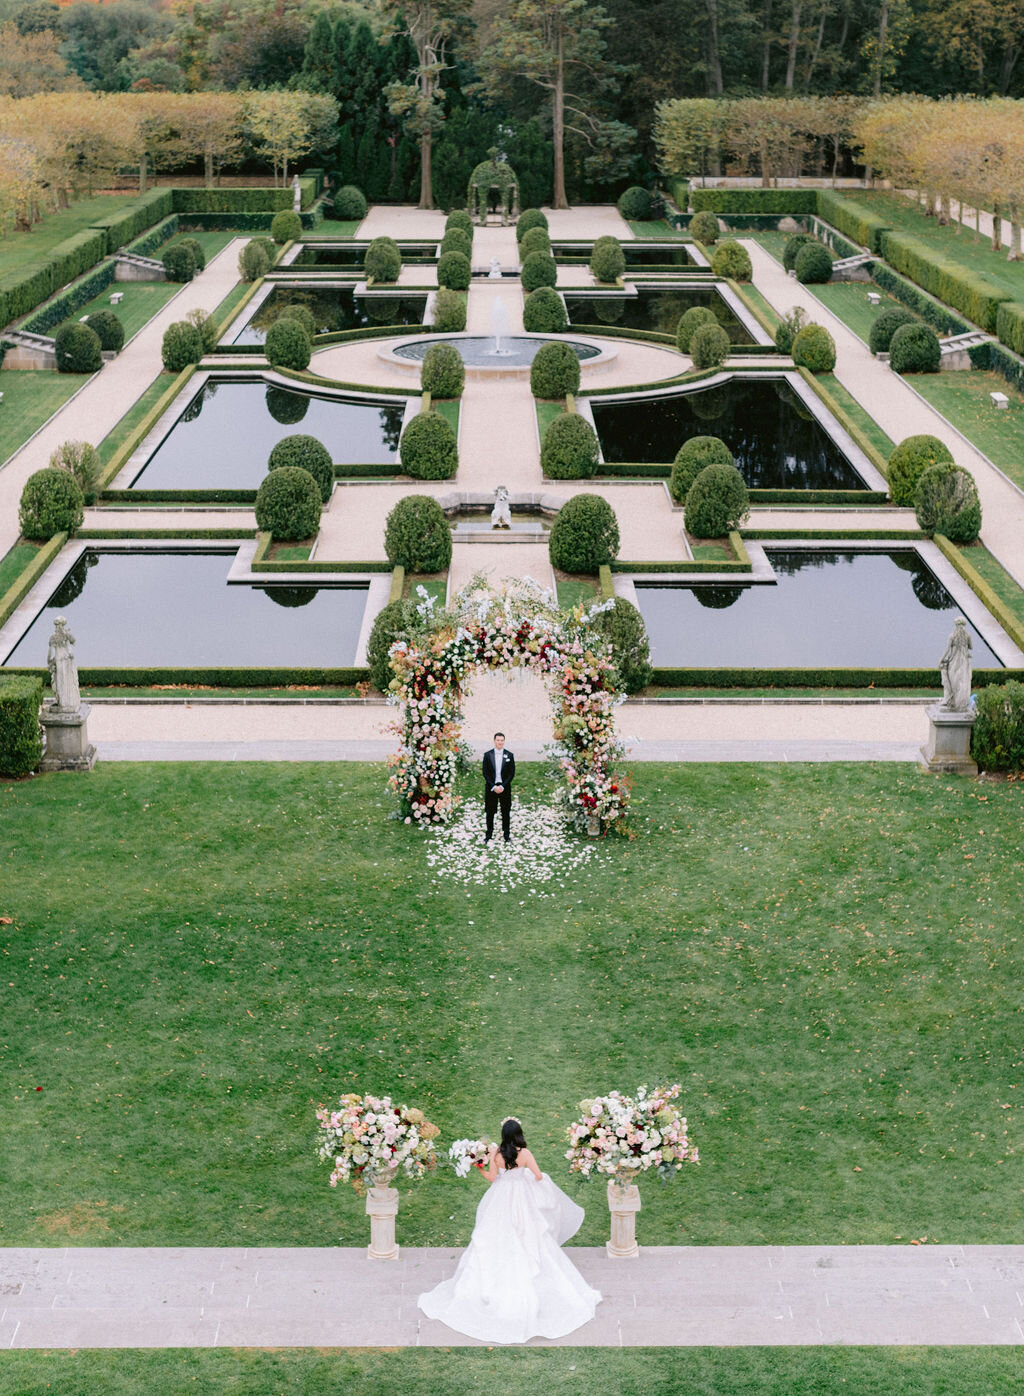 Bride walking towards groom in European style gardens